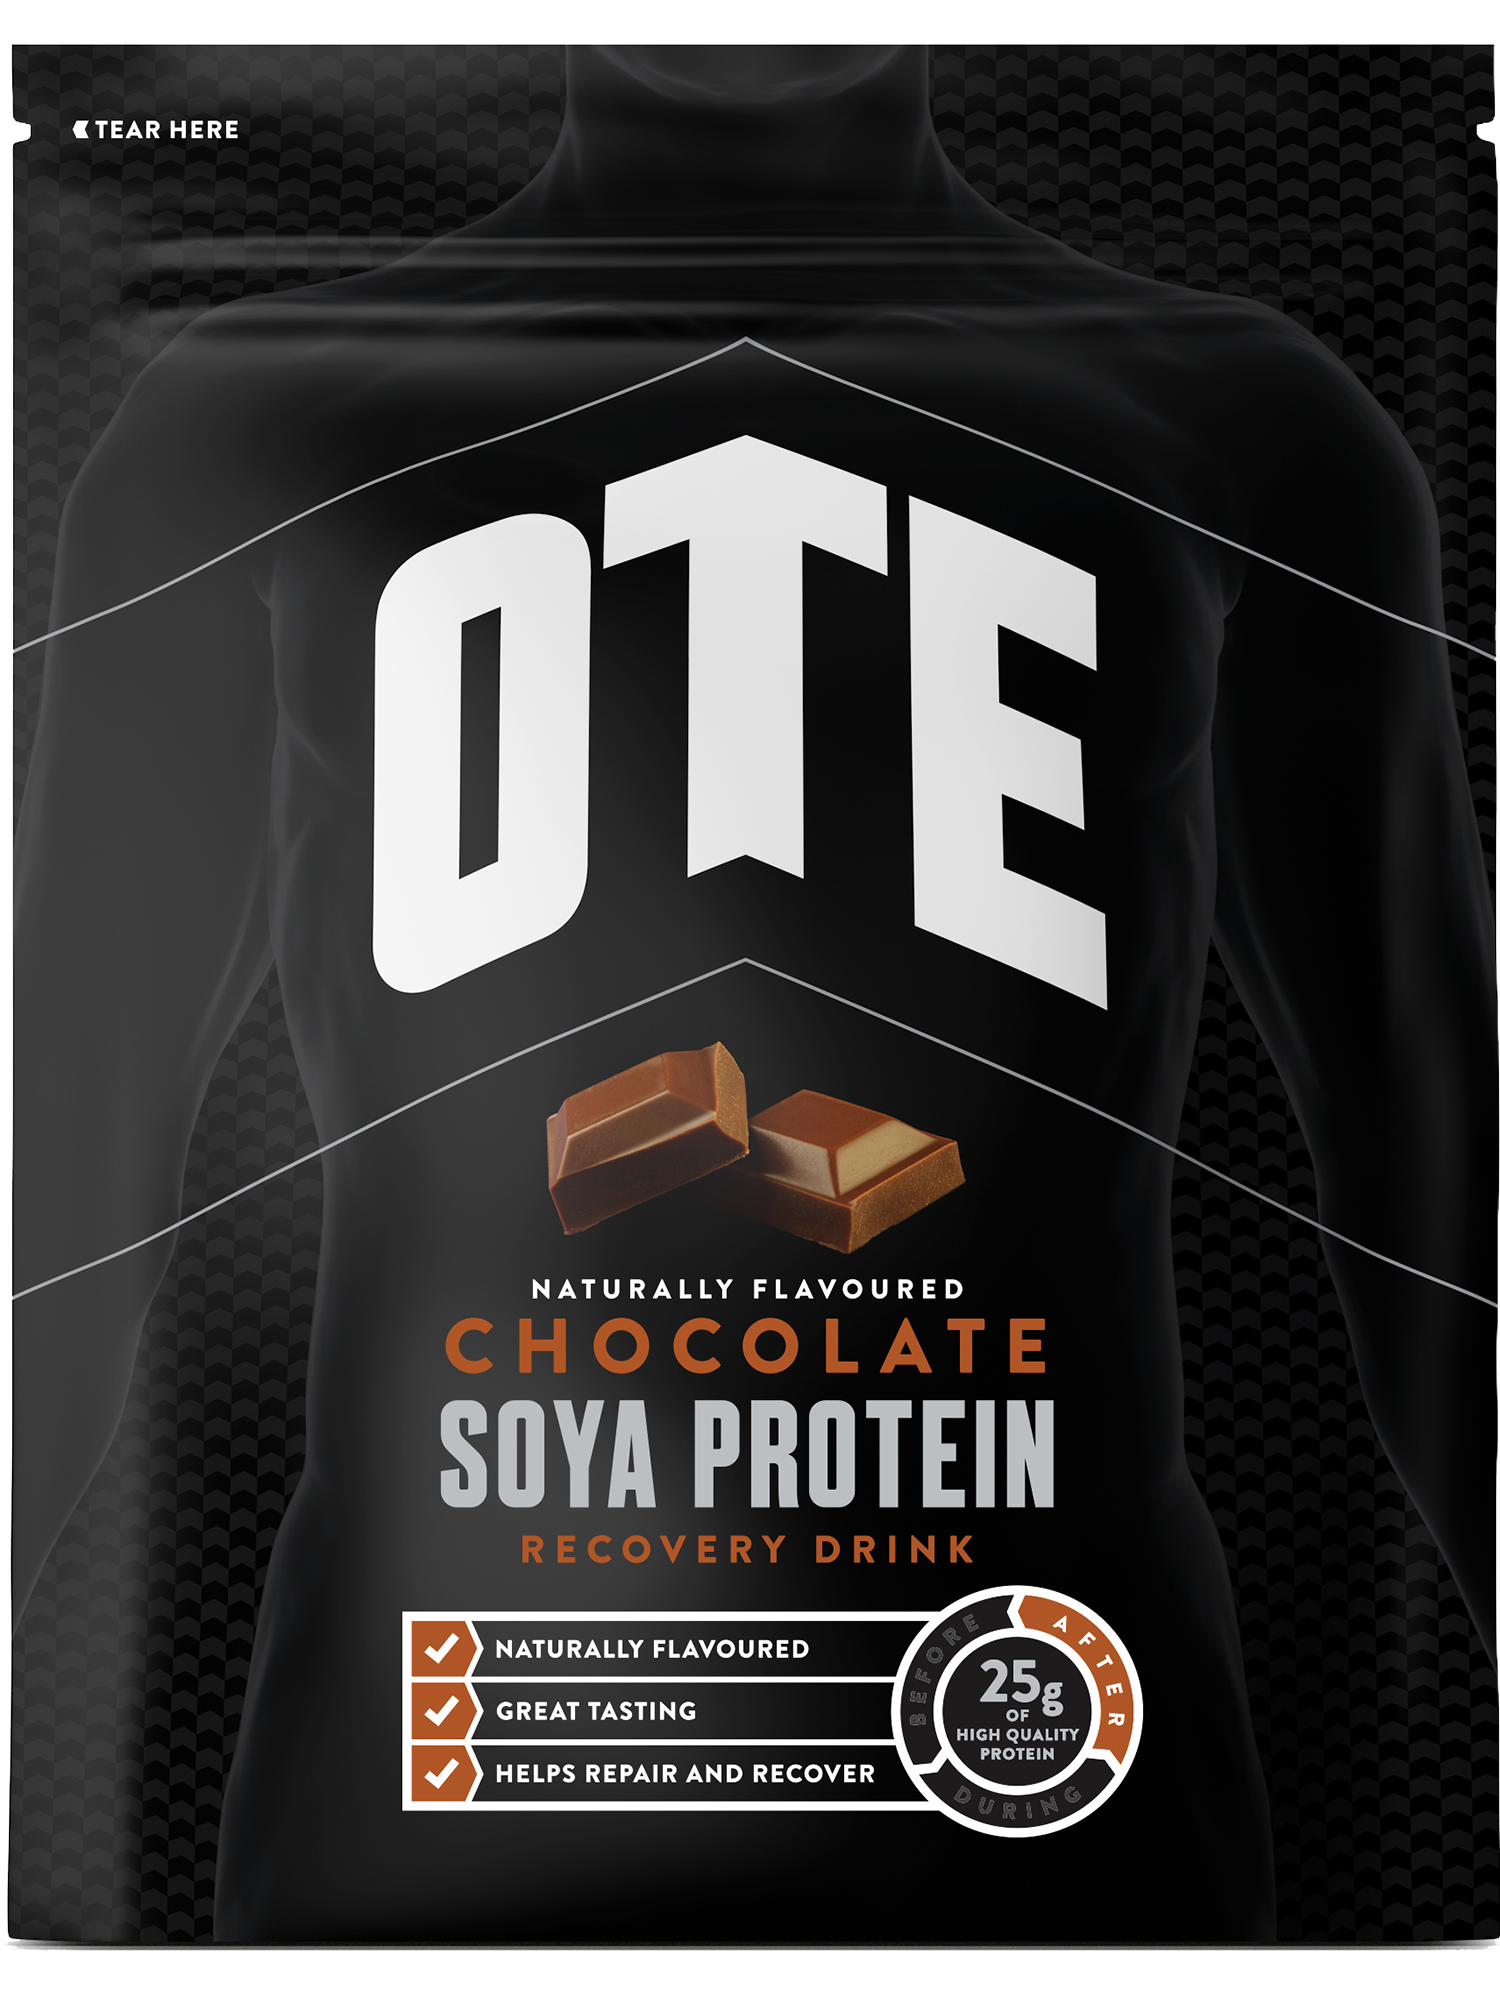 Chocolate soya protein